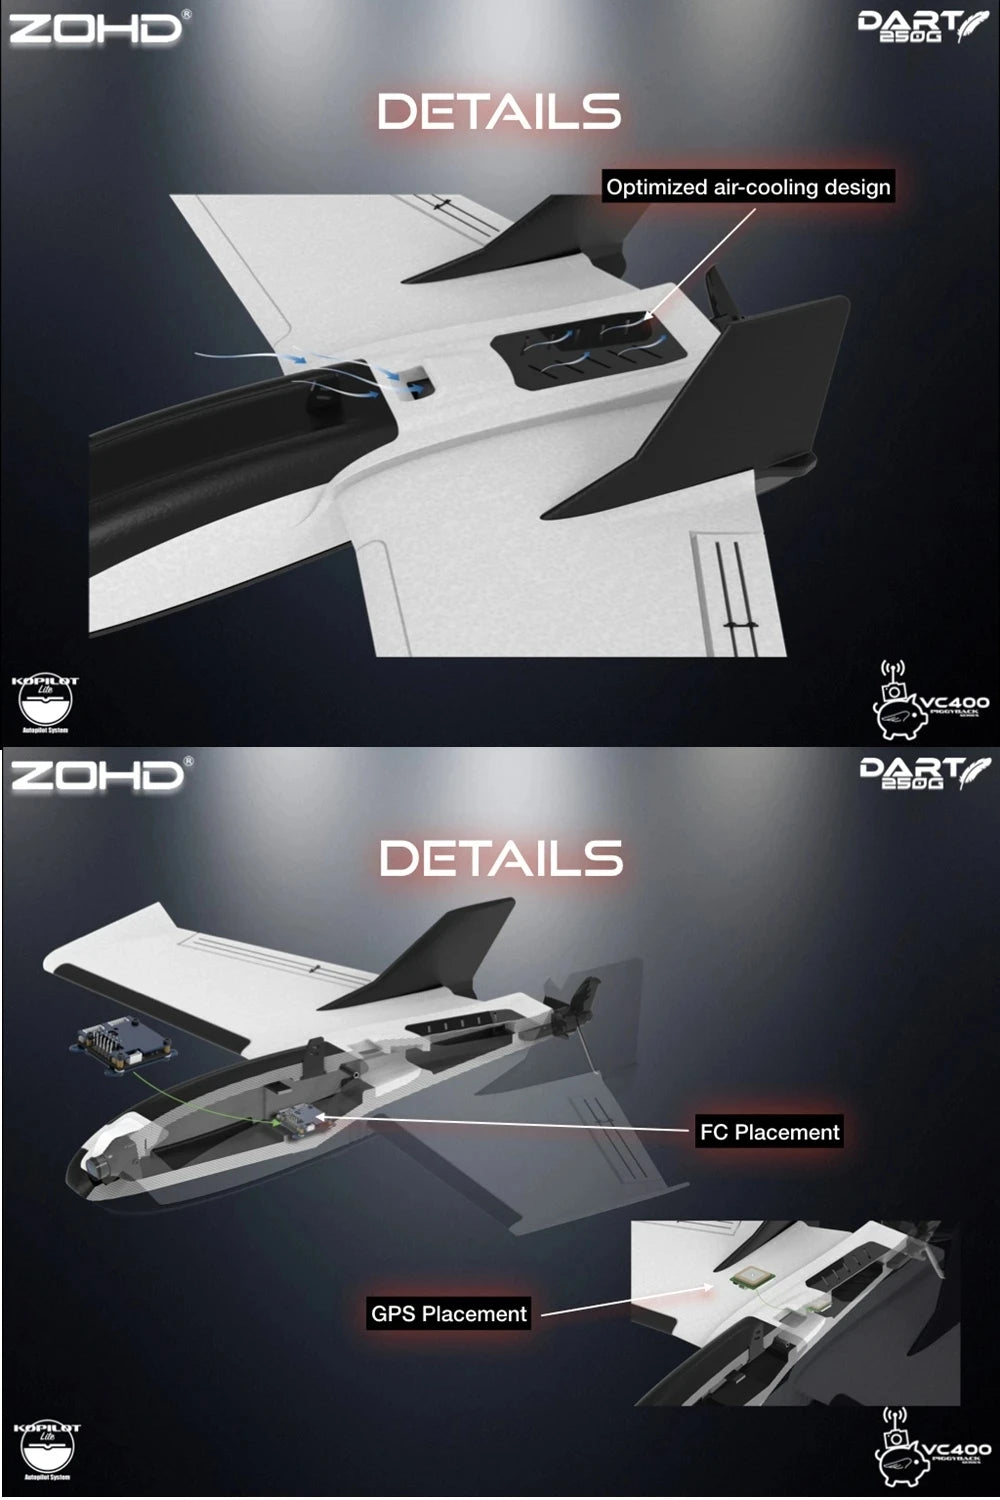 ZOHD Dart Wingspan RC Airplane, ZOHID DDszt( DETAILS Optimized air-cool